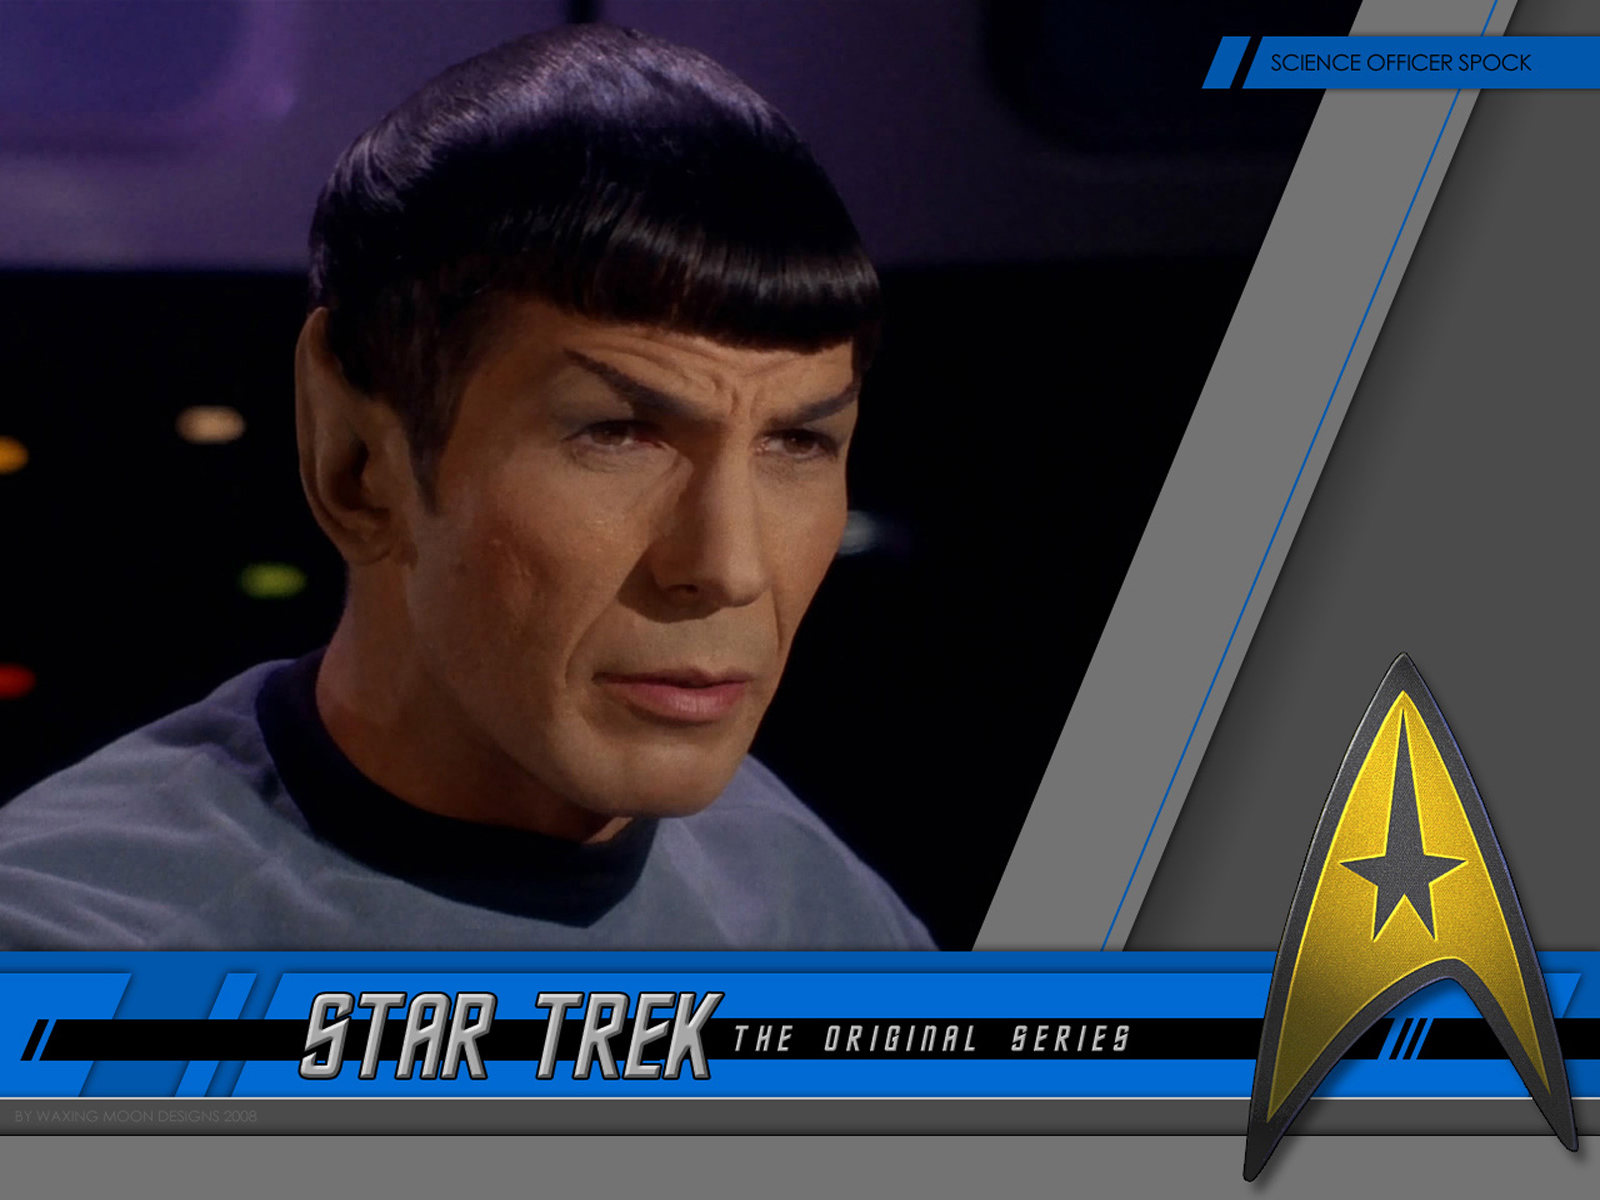 - Star Trek Science Officer Spock - free Star Trek computer desktop wallpaper, pictures, images.